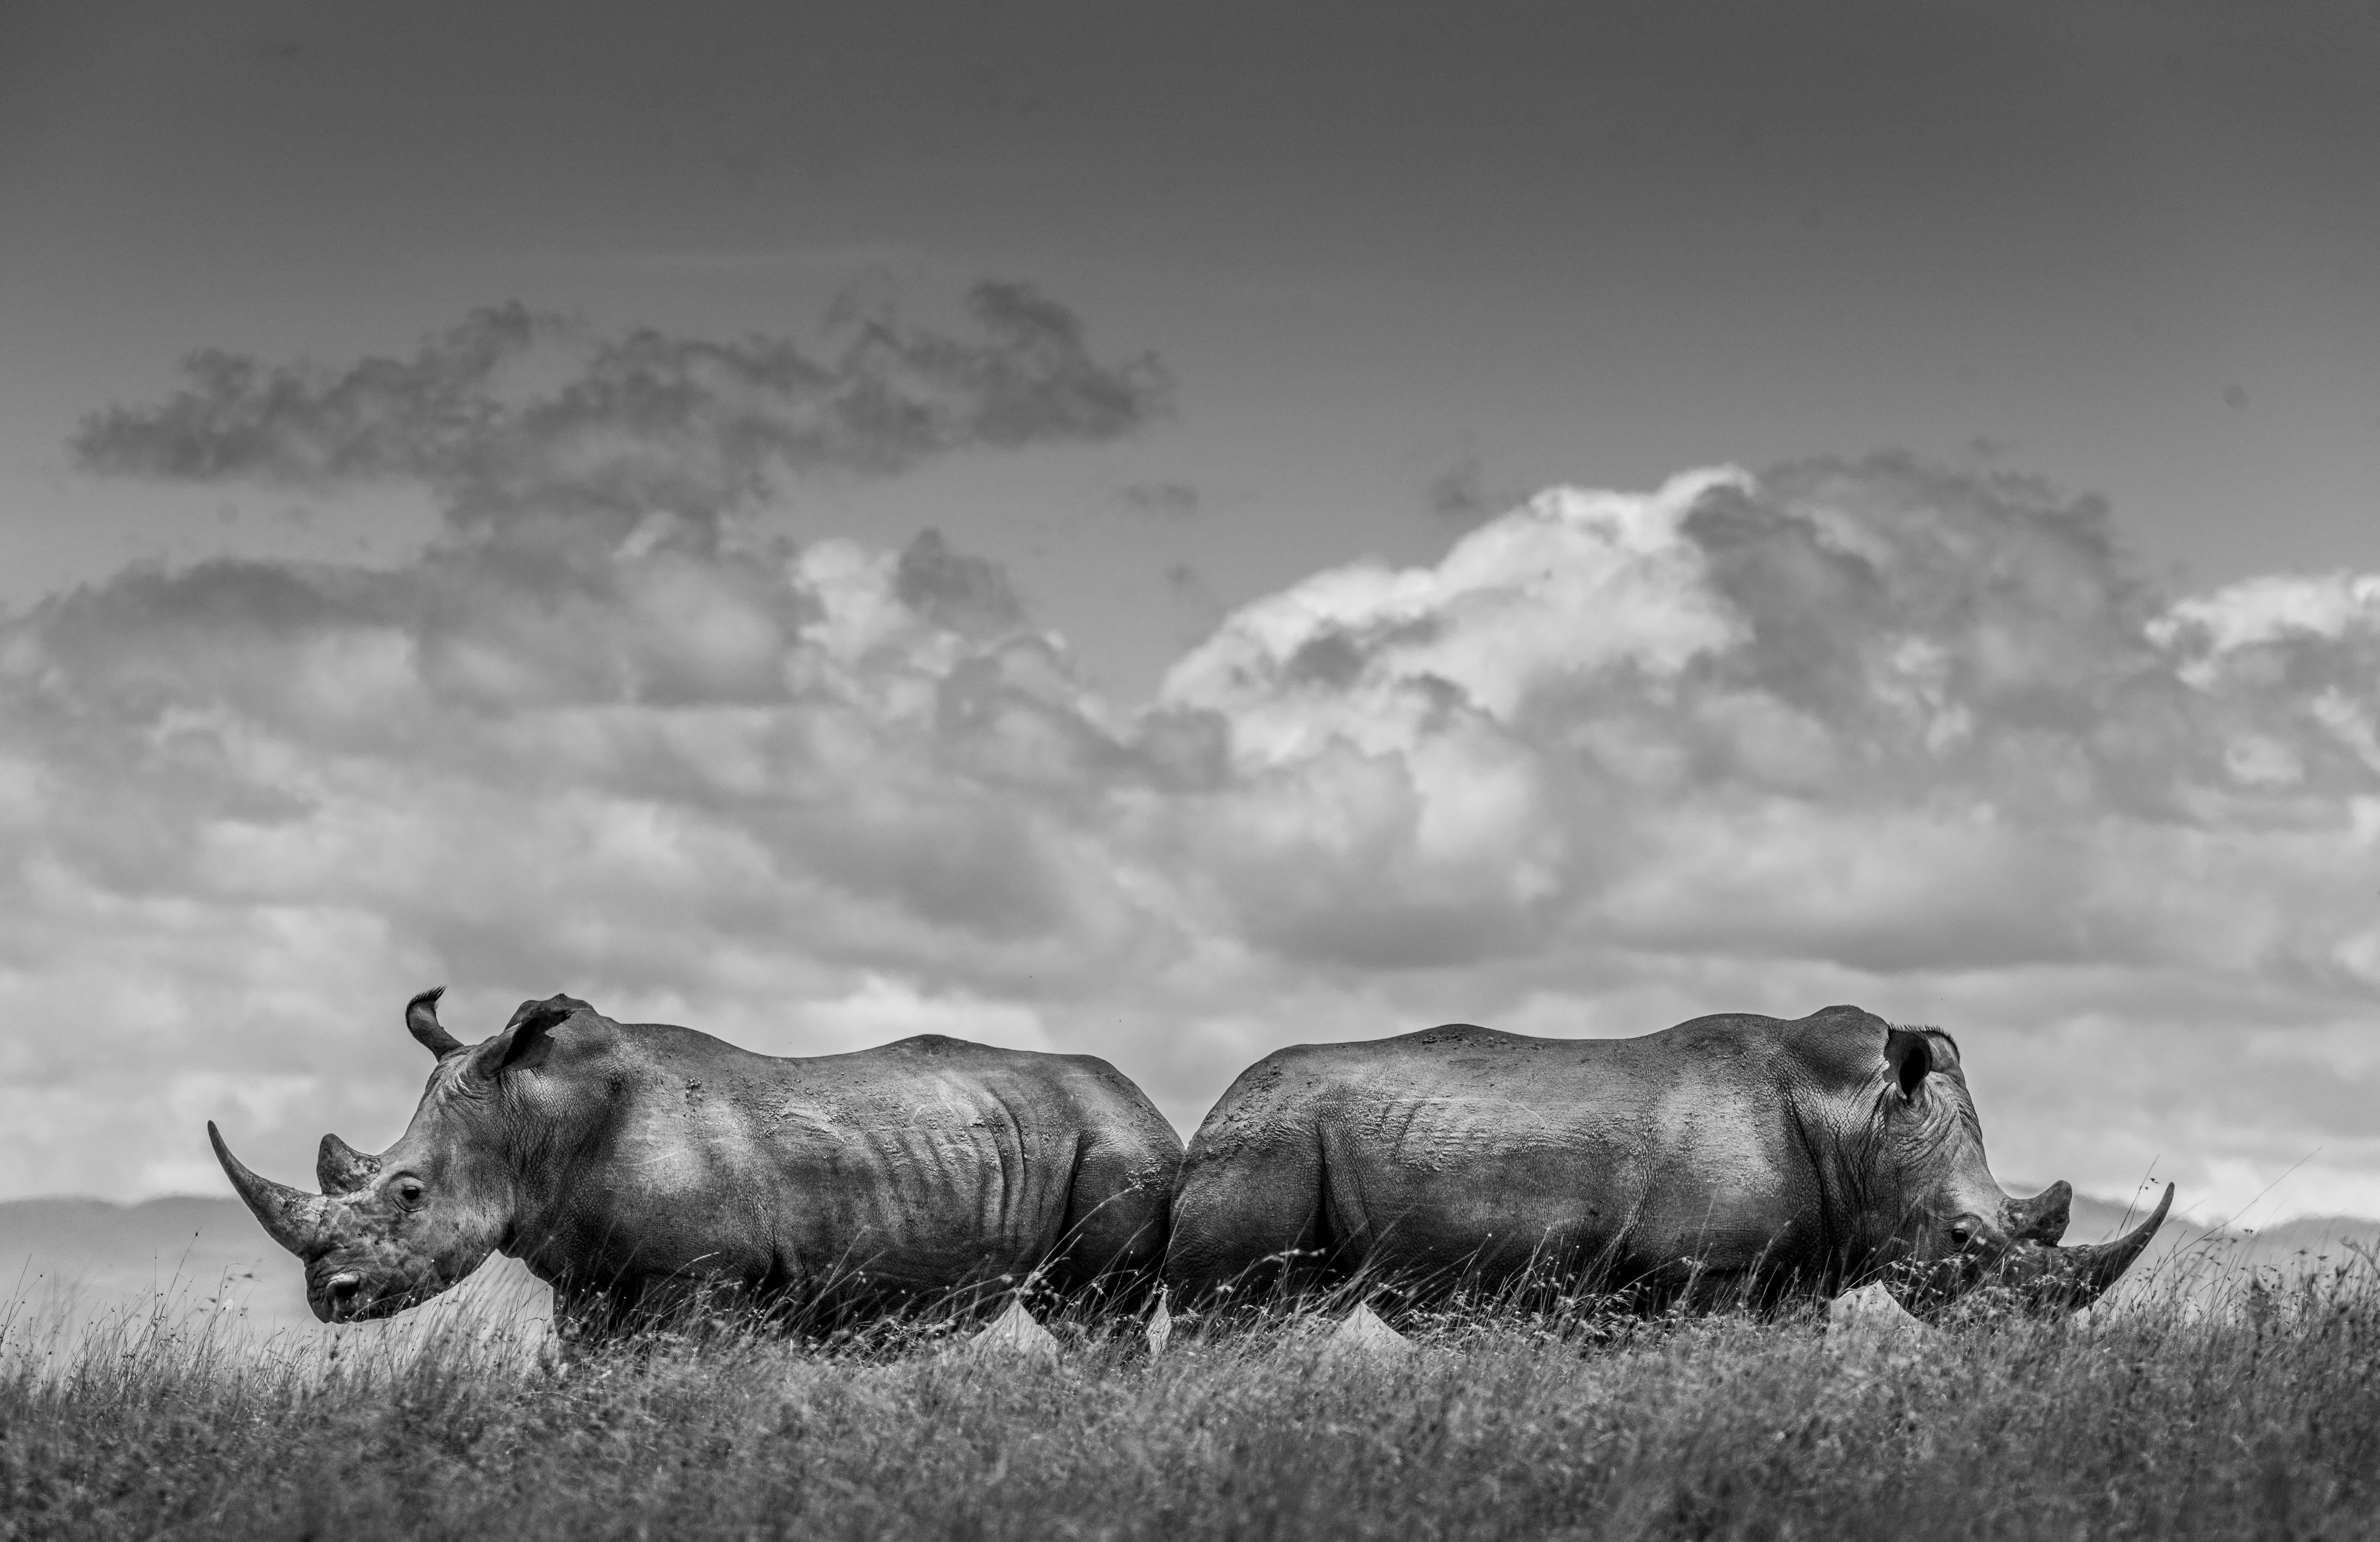 James Lewin Animal Print – Rückseite zur Rückseite, Borana, Kenya. (18"" x 27,78")